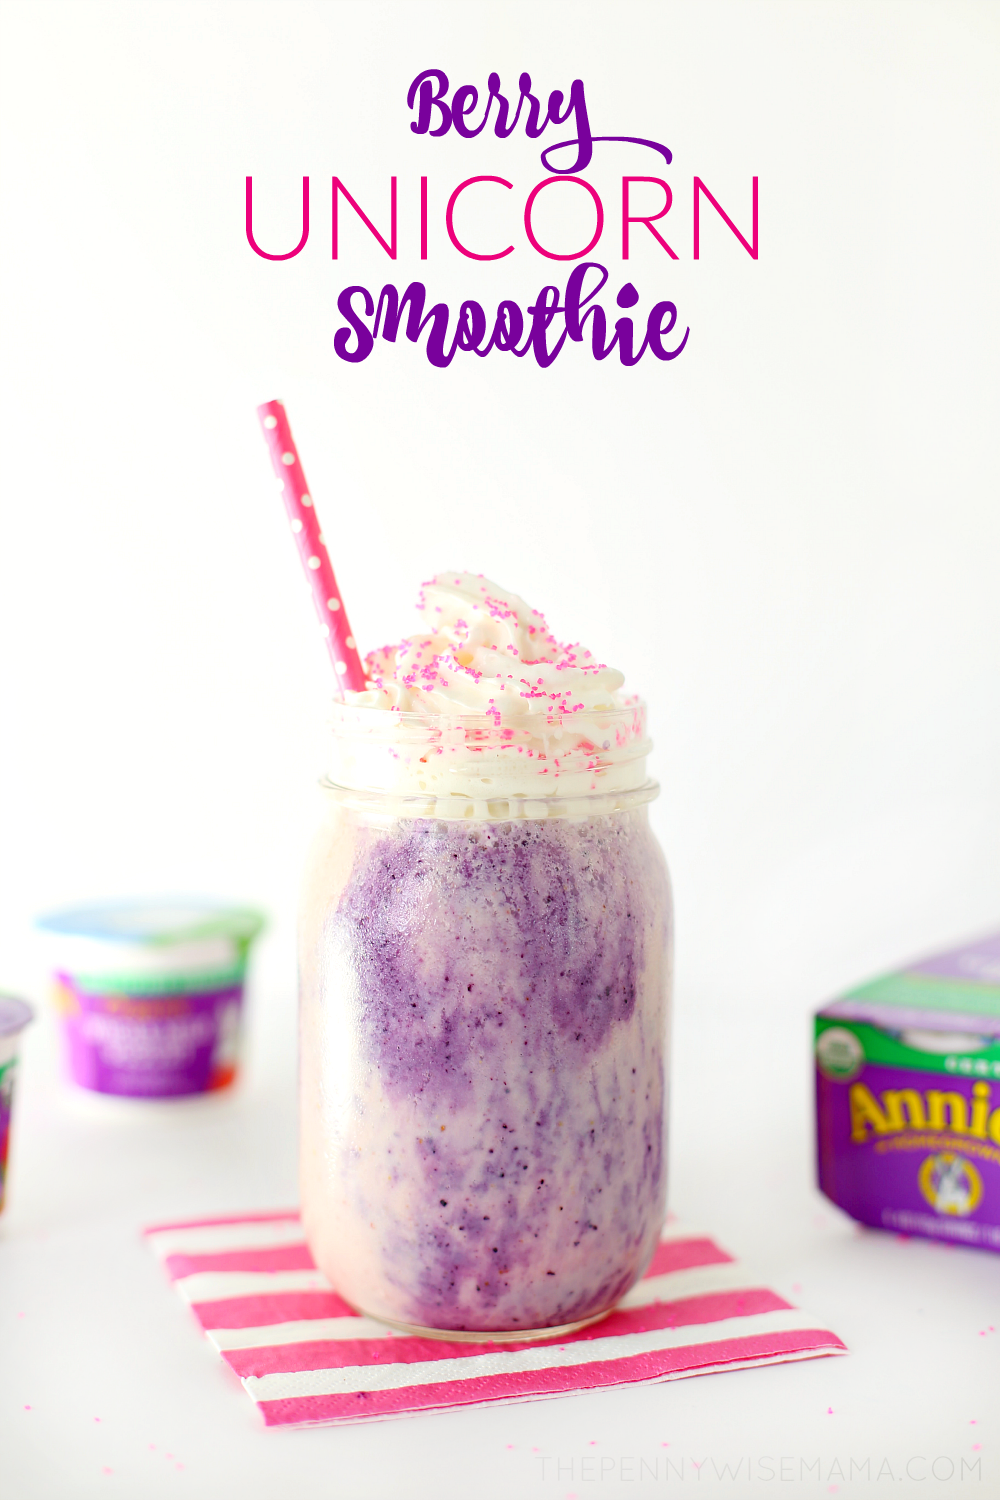 Berry Unicorn Smoothie - Healthy & Delicious!